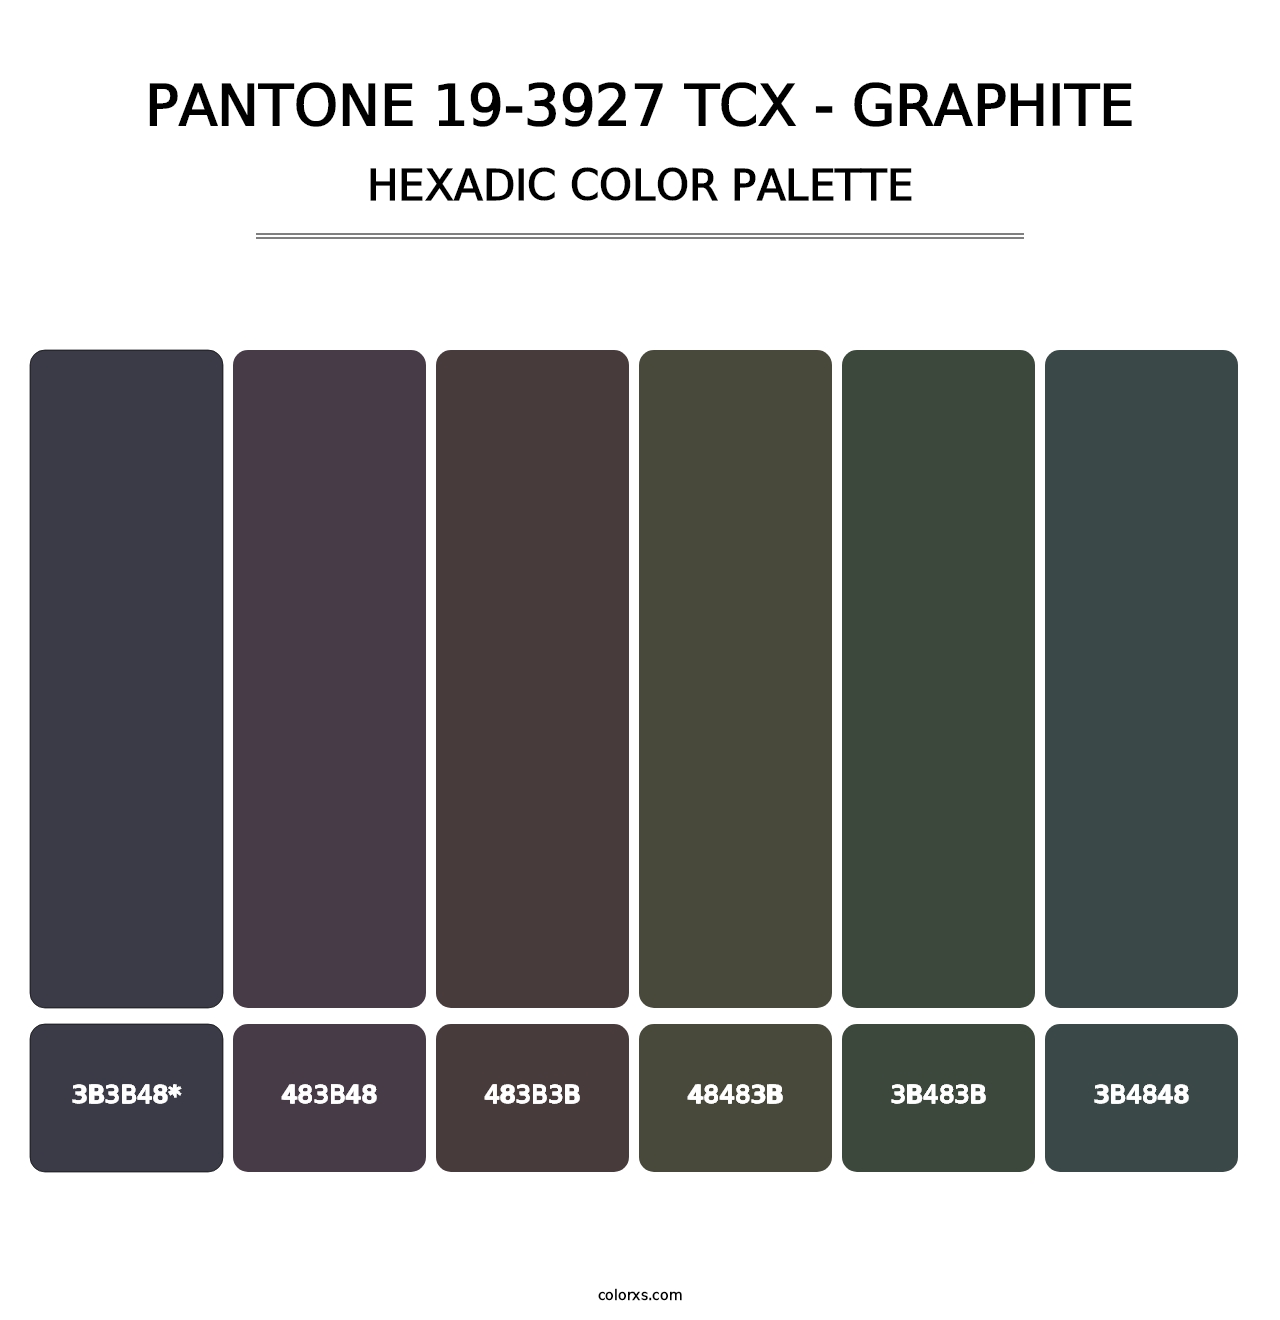 PANTONE 19-3927 TCX - Graphite - Hexadic Color Palette